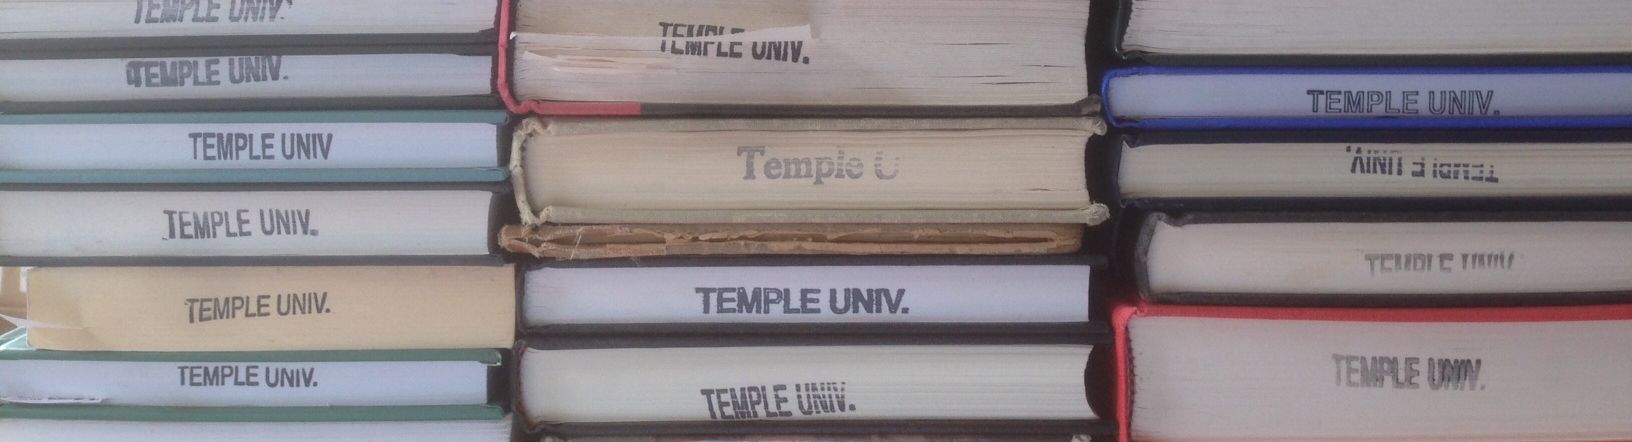 temple creative writing